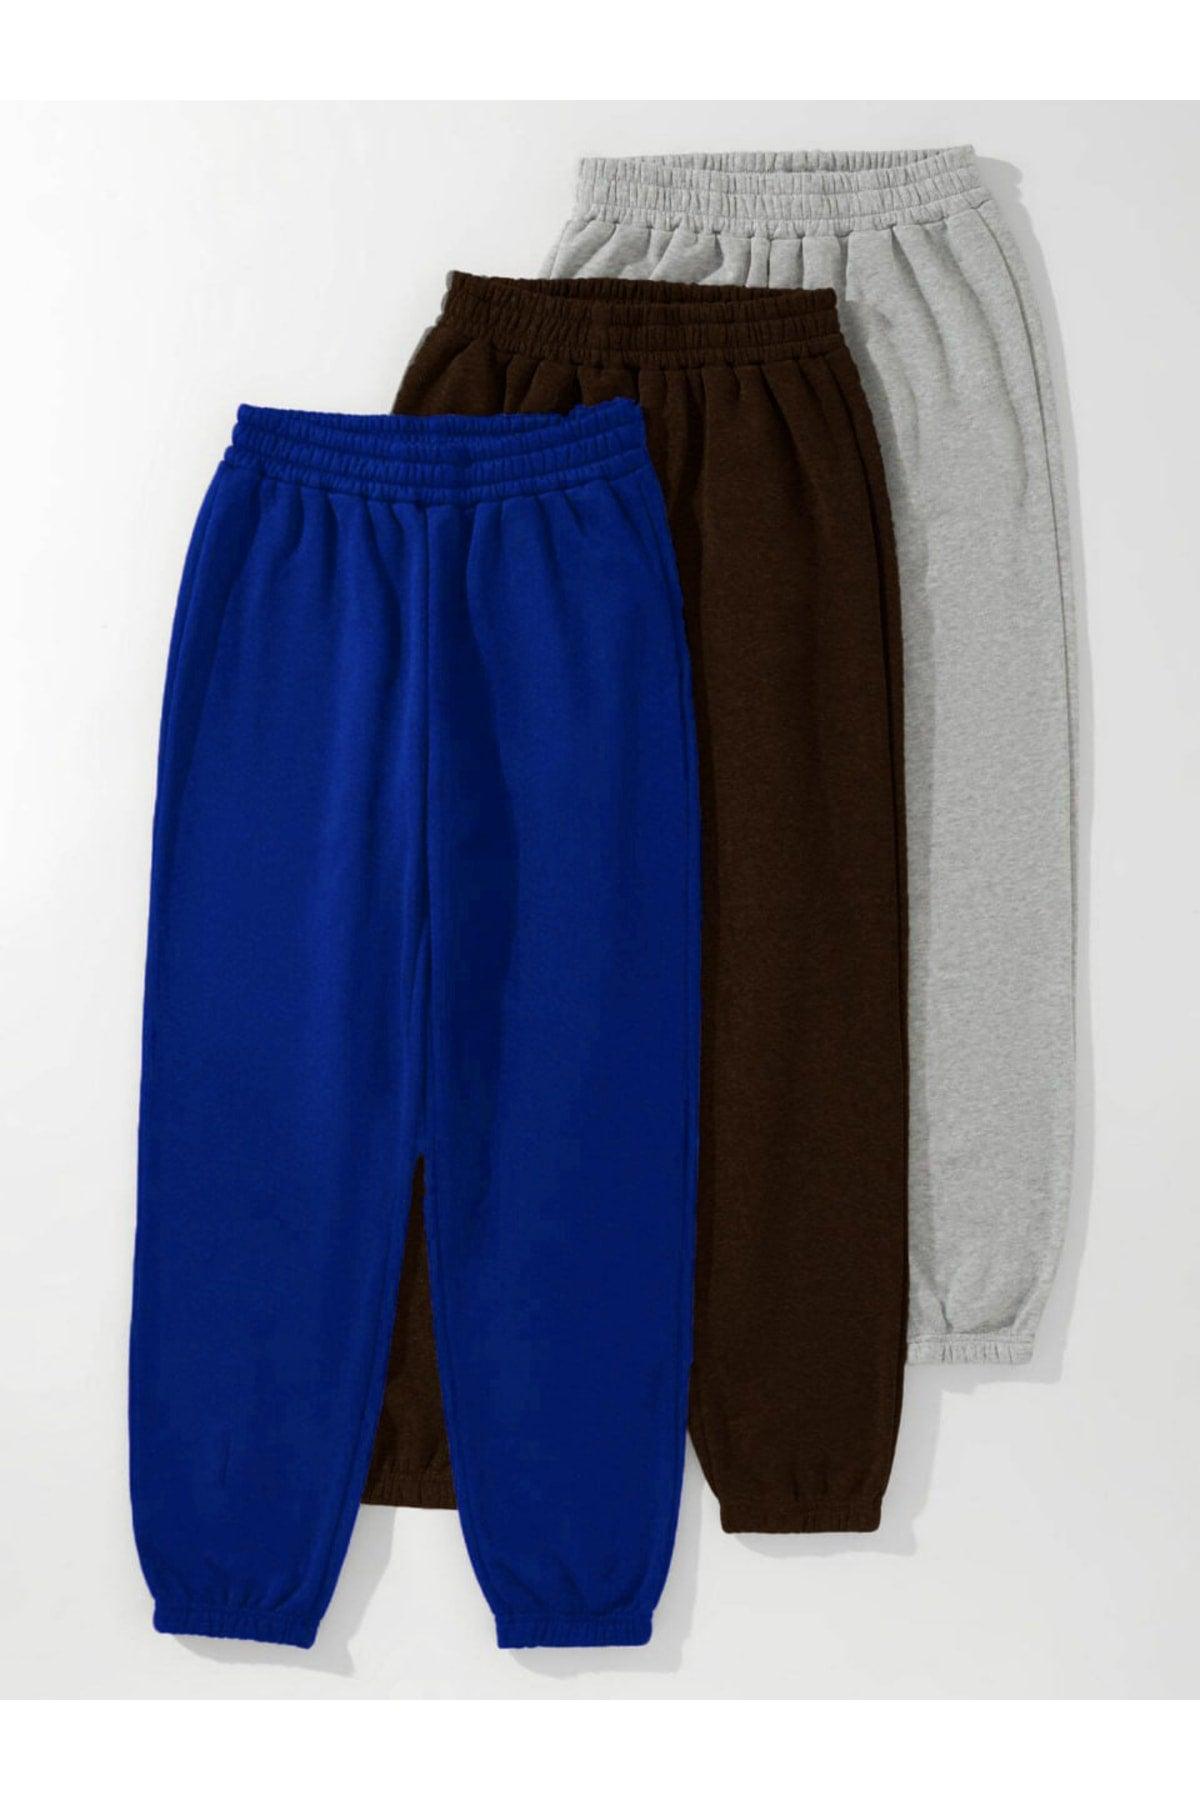 Basic 3-pack Jogger Sweatpants - Sax Blue, Gray And Brown, Elastic Legs, Summer - Swordslife